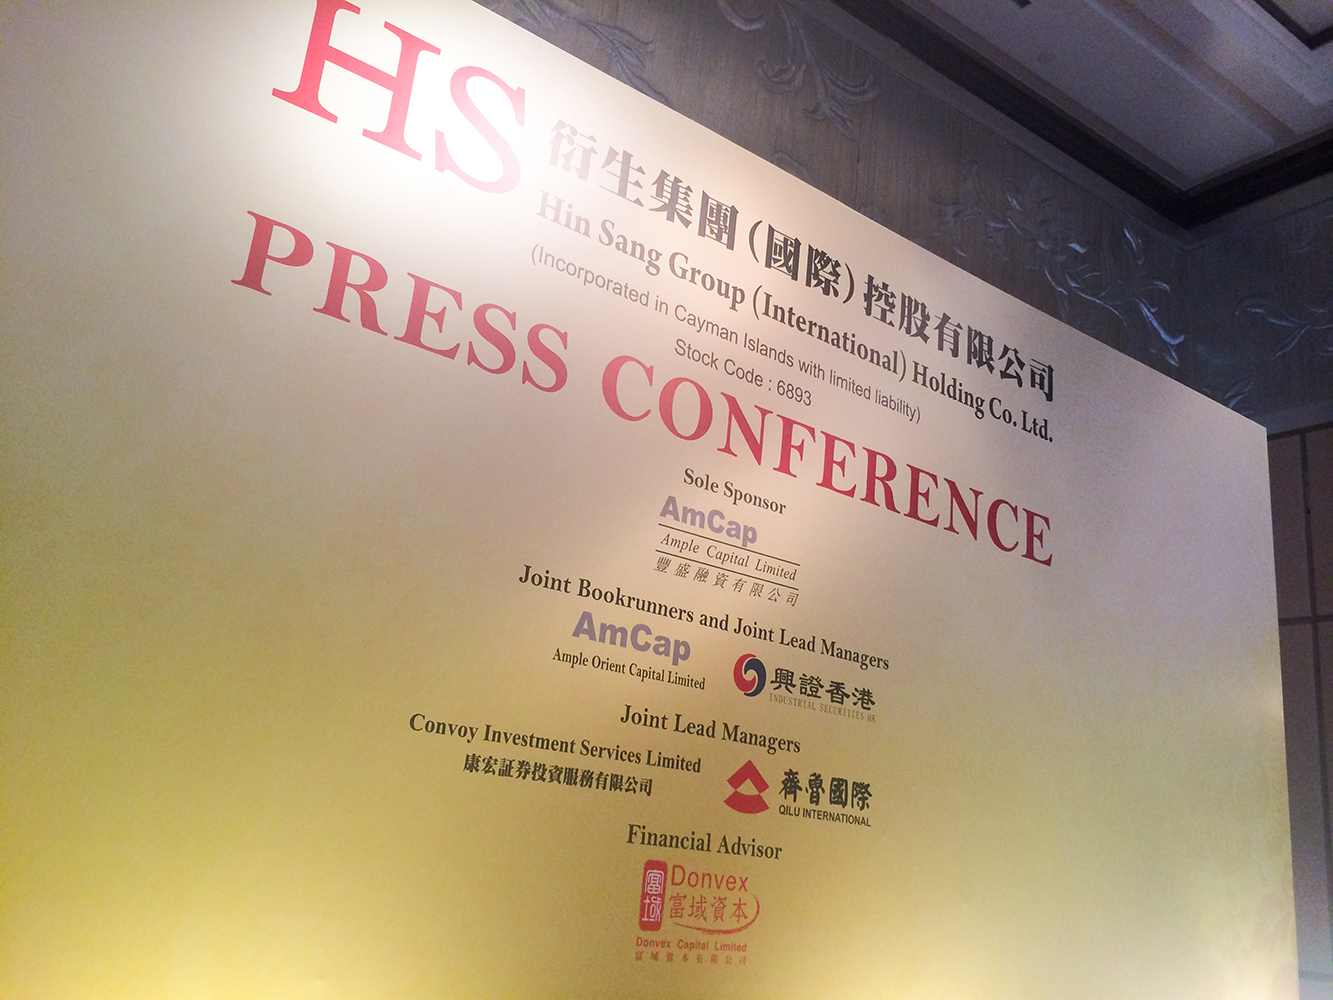 衍生集團（國際）控股公司記者招待會<br>
        Press Conference for Hin Sang Group (International) Holding Company Limited